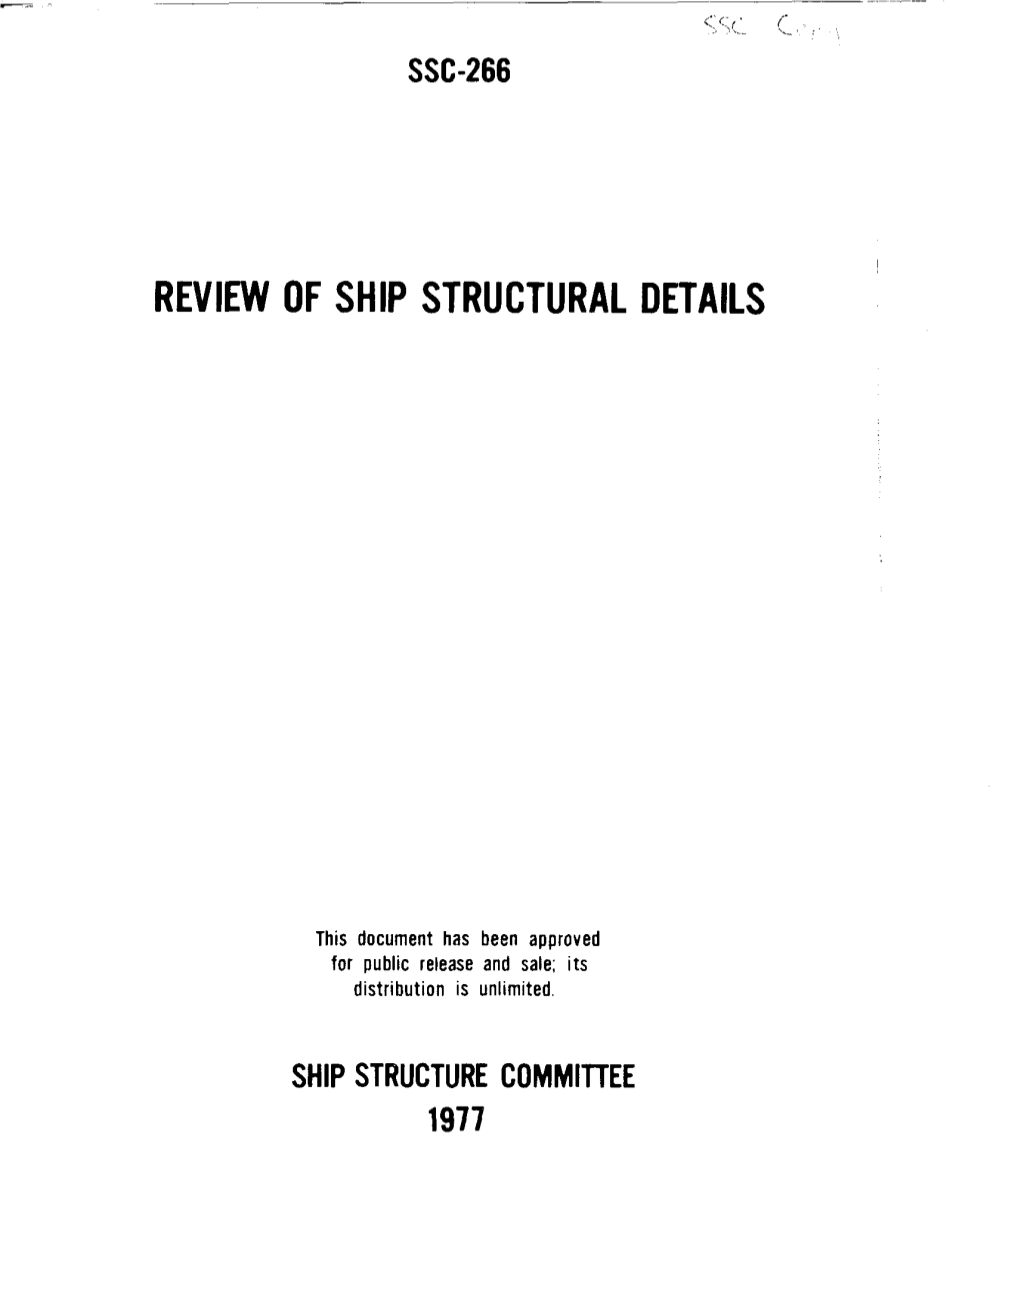 Reviewof Shipstructuraldetails